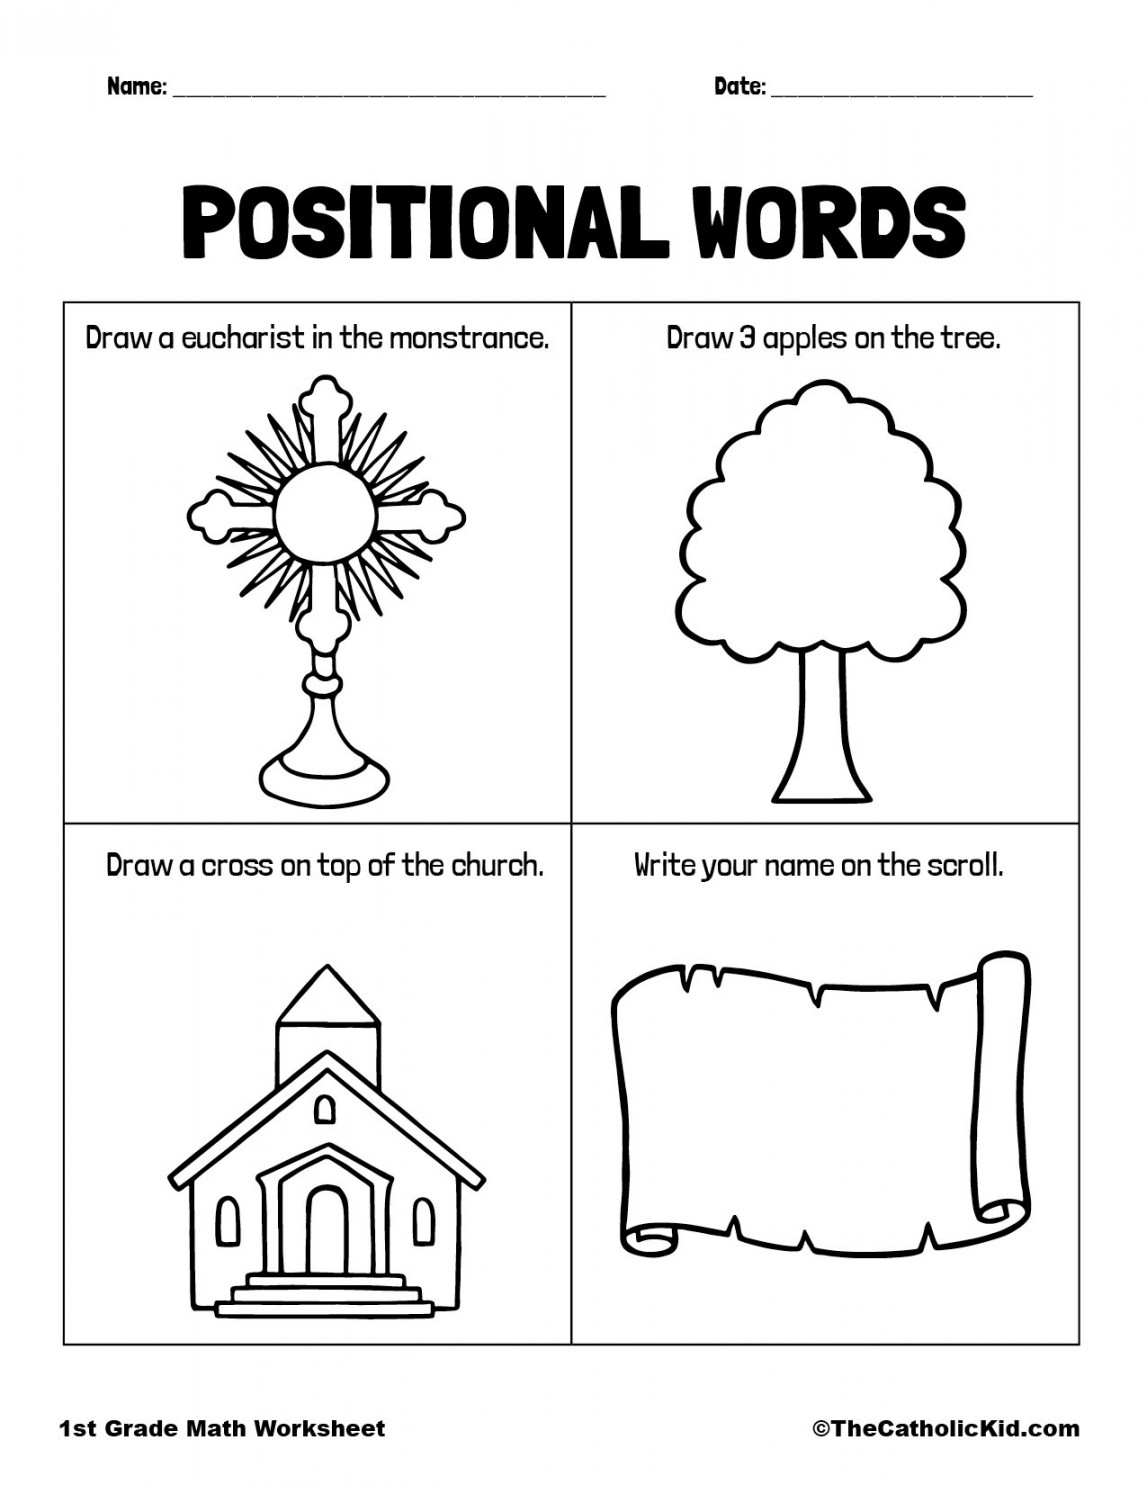 Positional Words Worksheet - TheCatholicKid